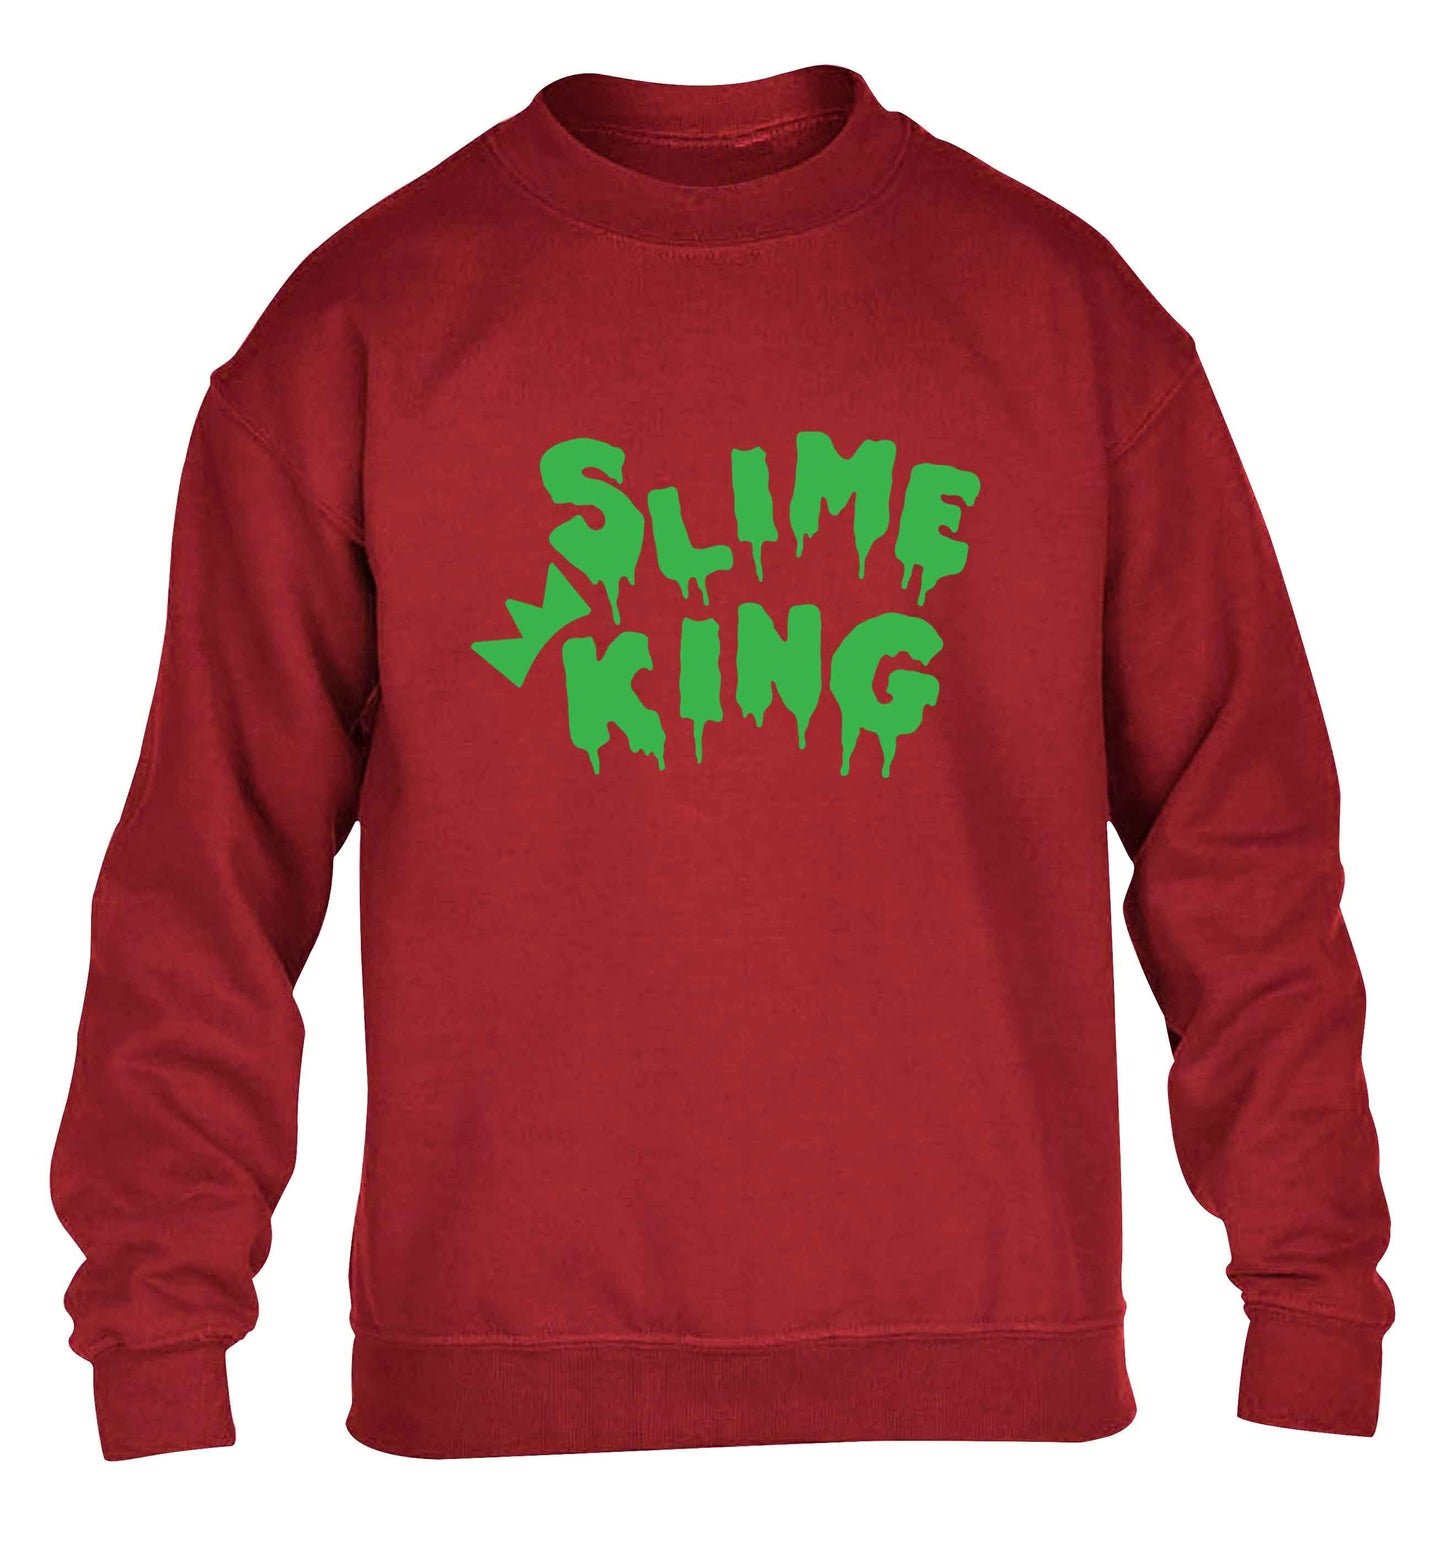 Neon green slime king children's grey sweater 12-13 Years